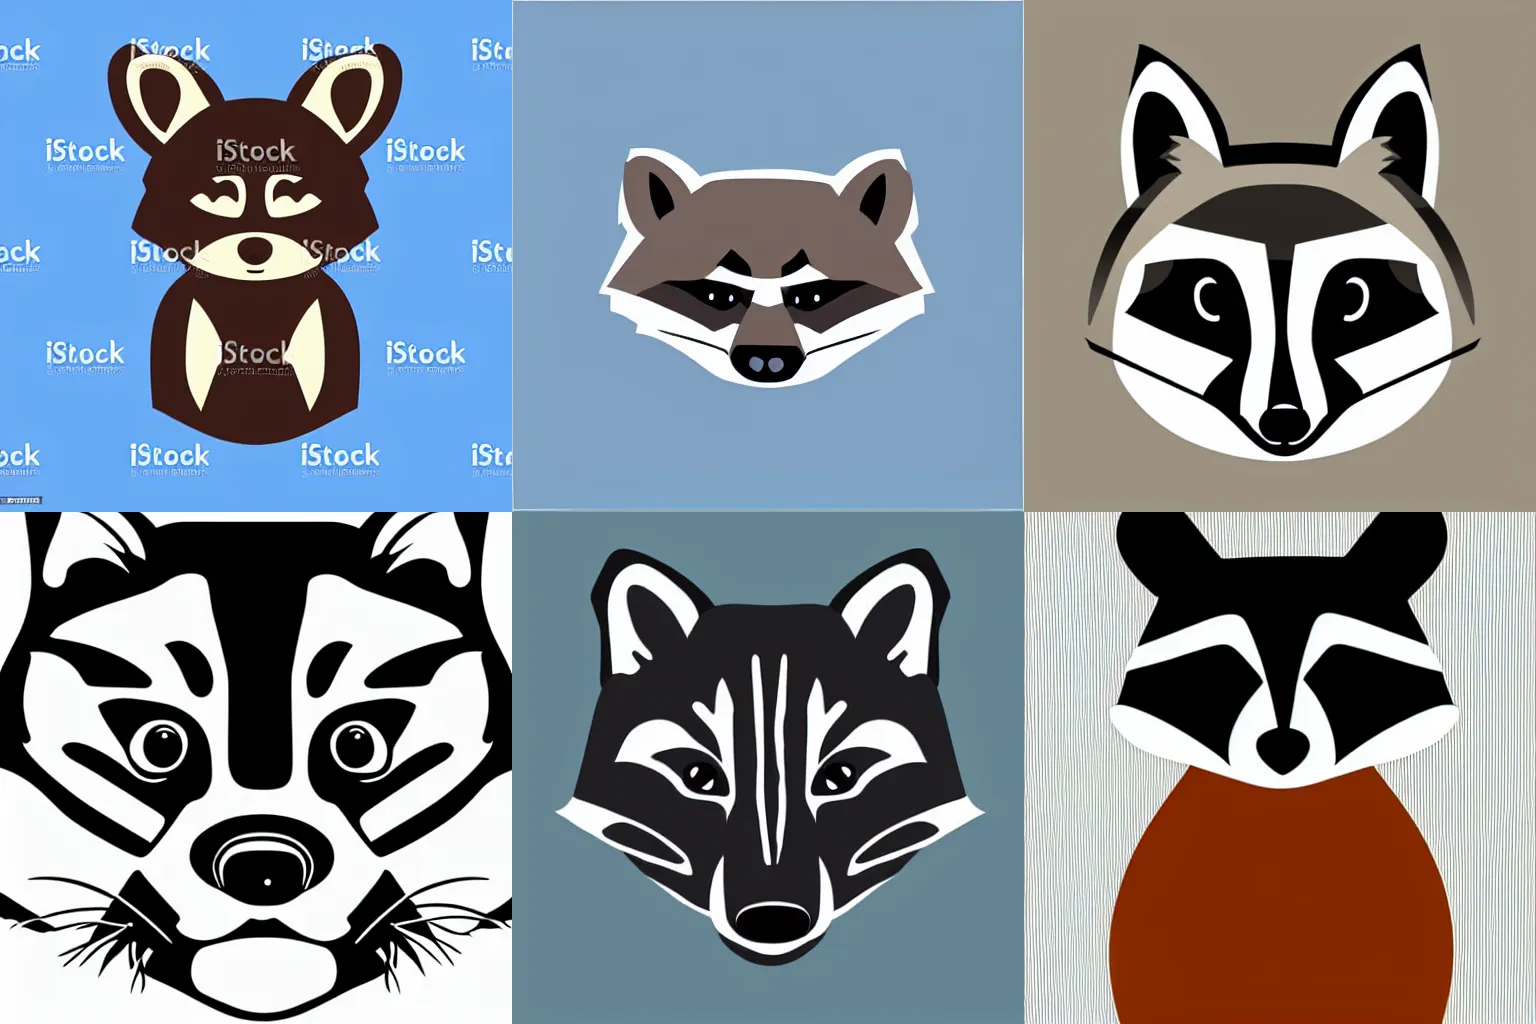 Prompt: minimalist vector art of a raccoon